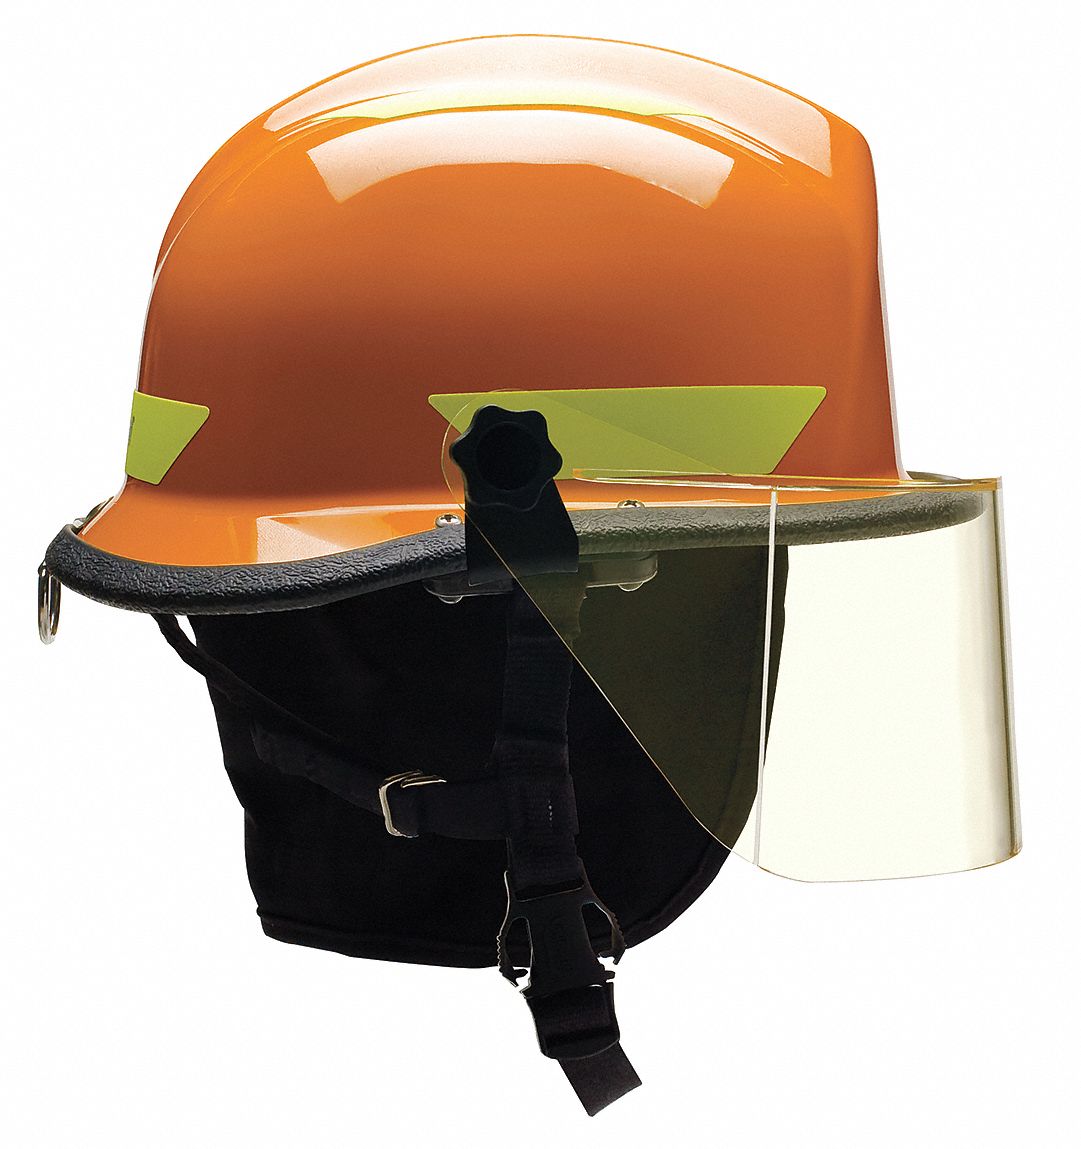 helmet ratchet strap lock